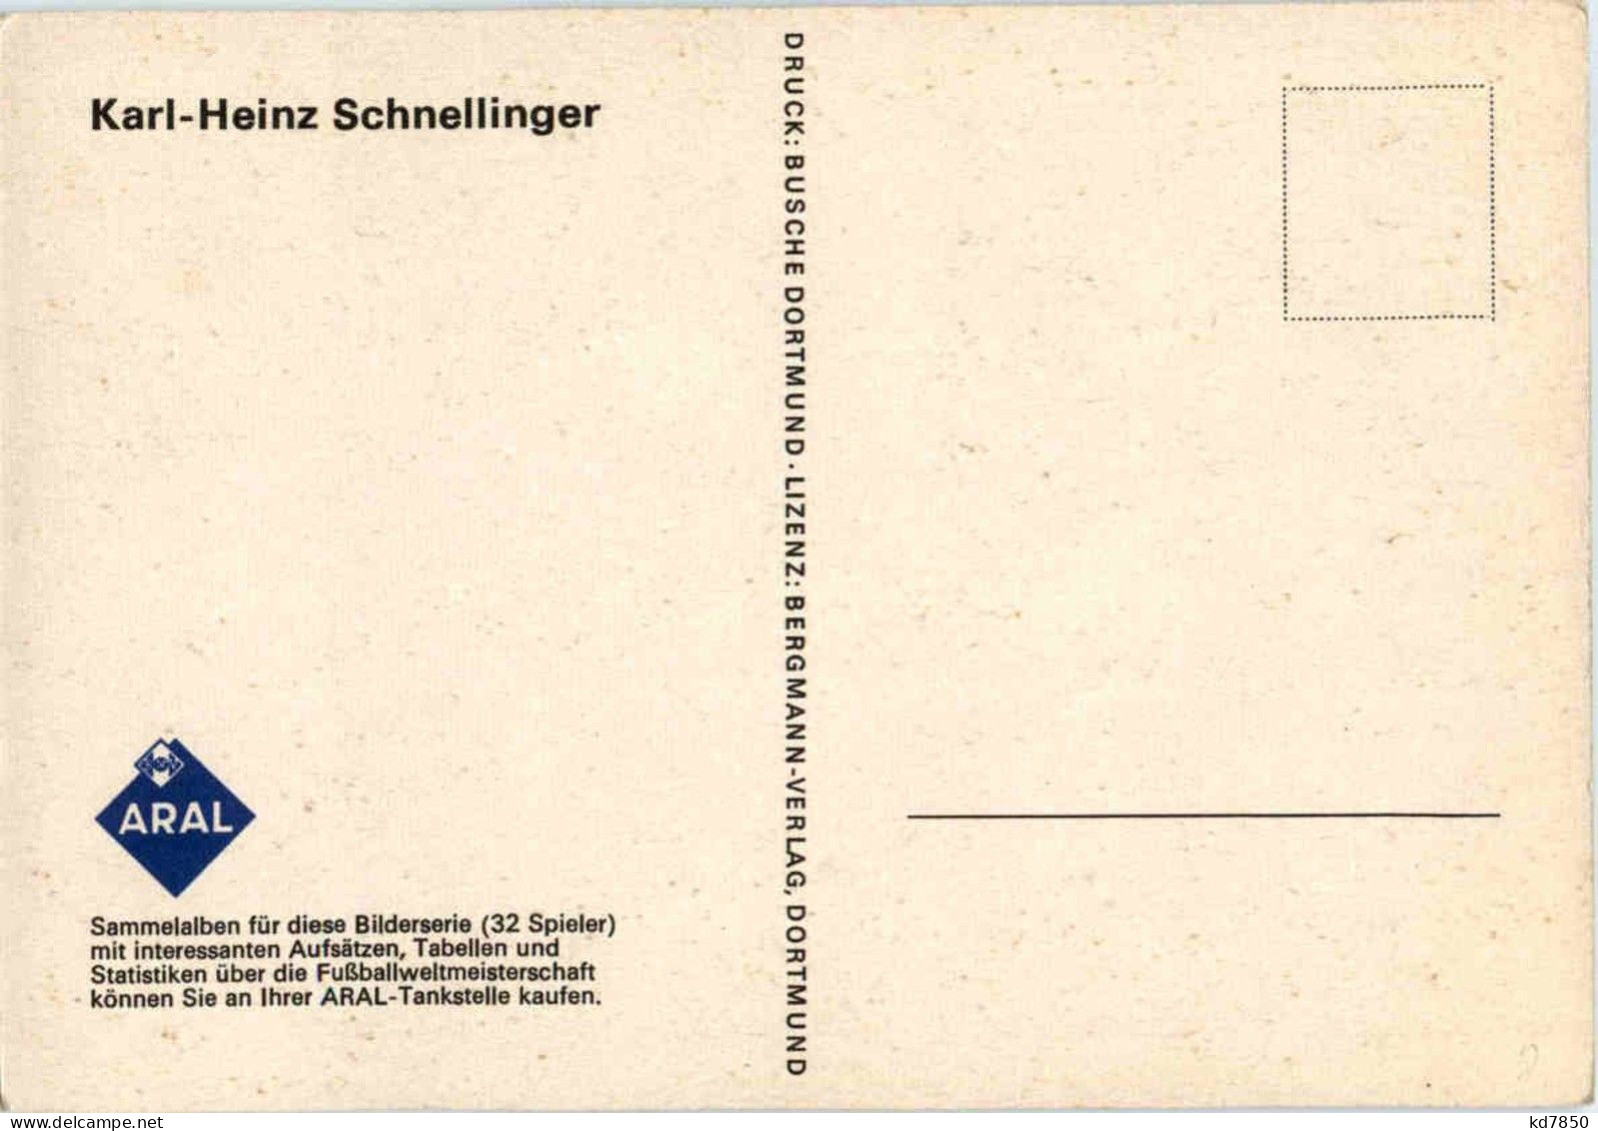 Karl - Heinz Schnellinger - Soccer